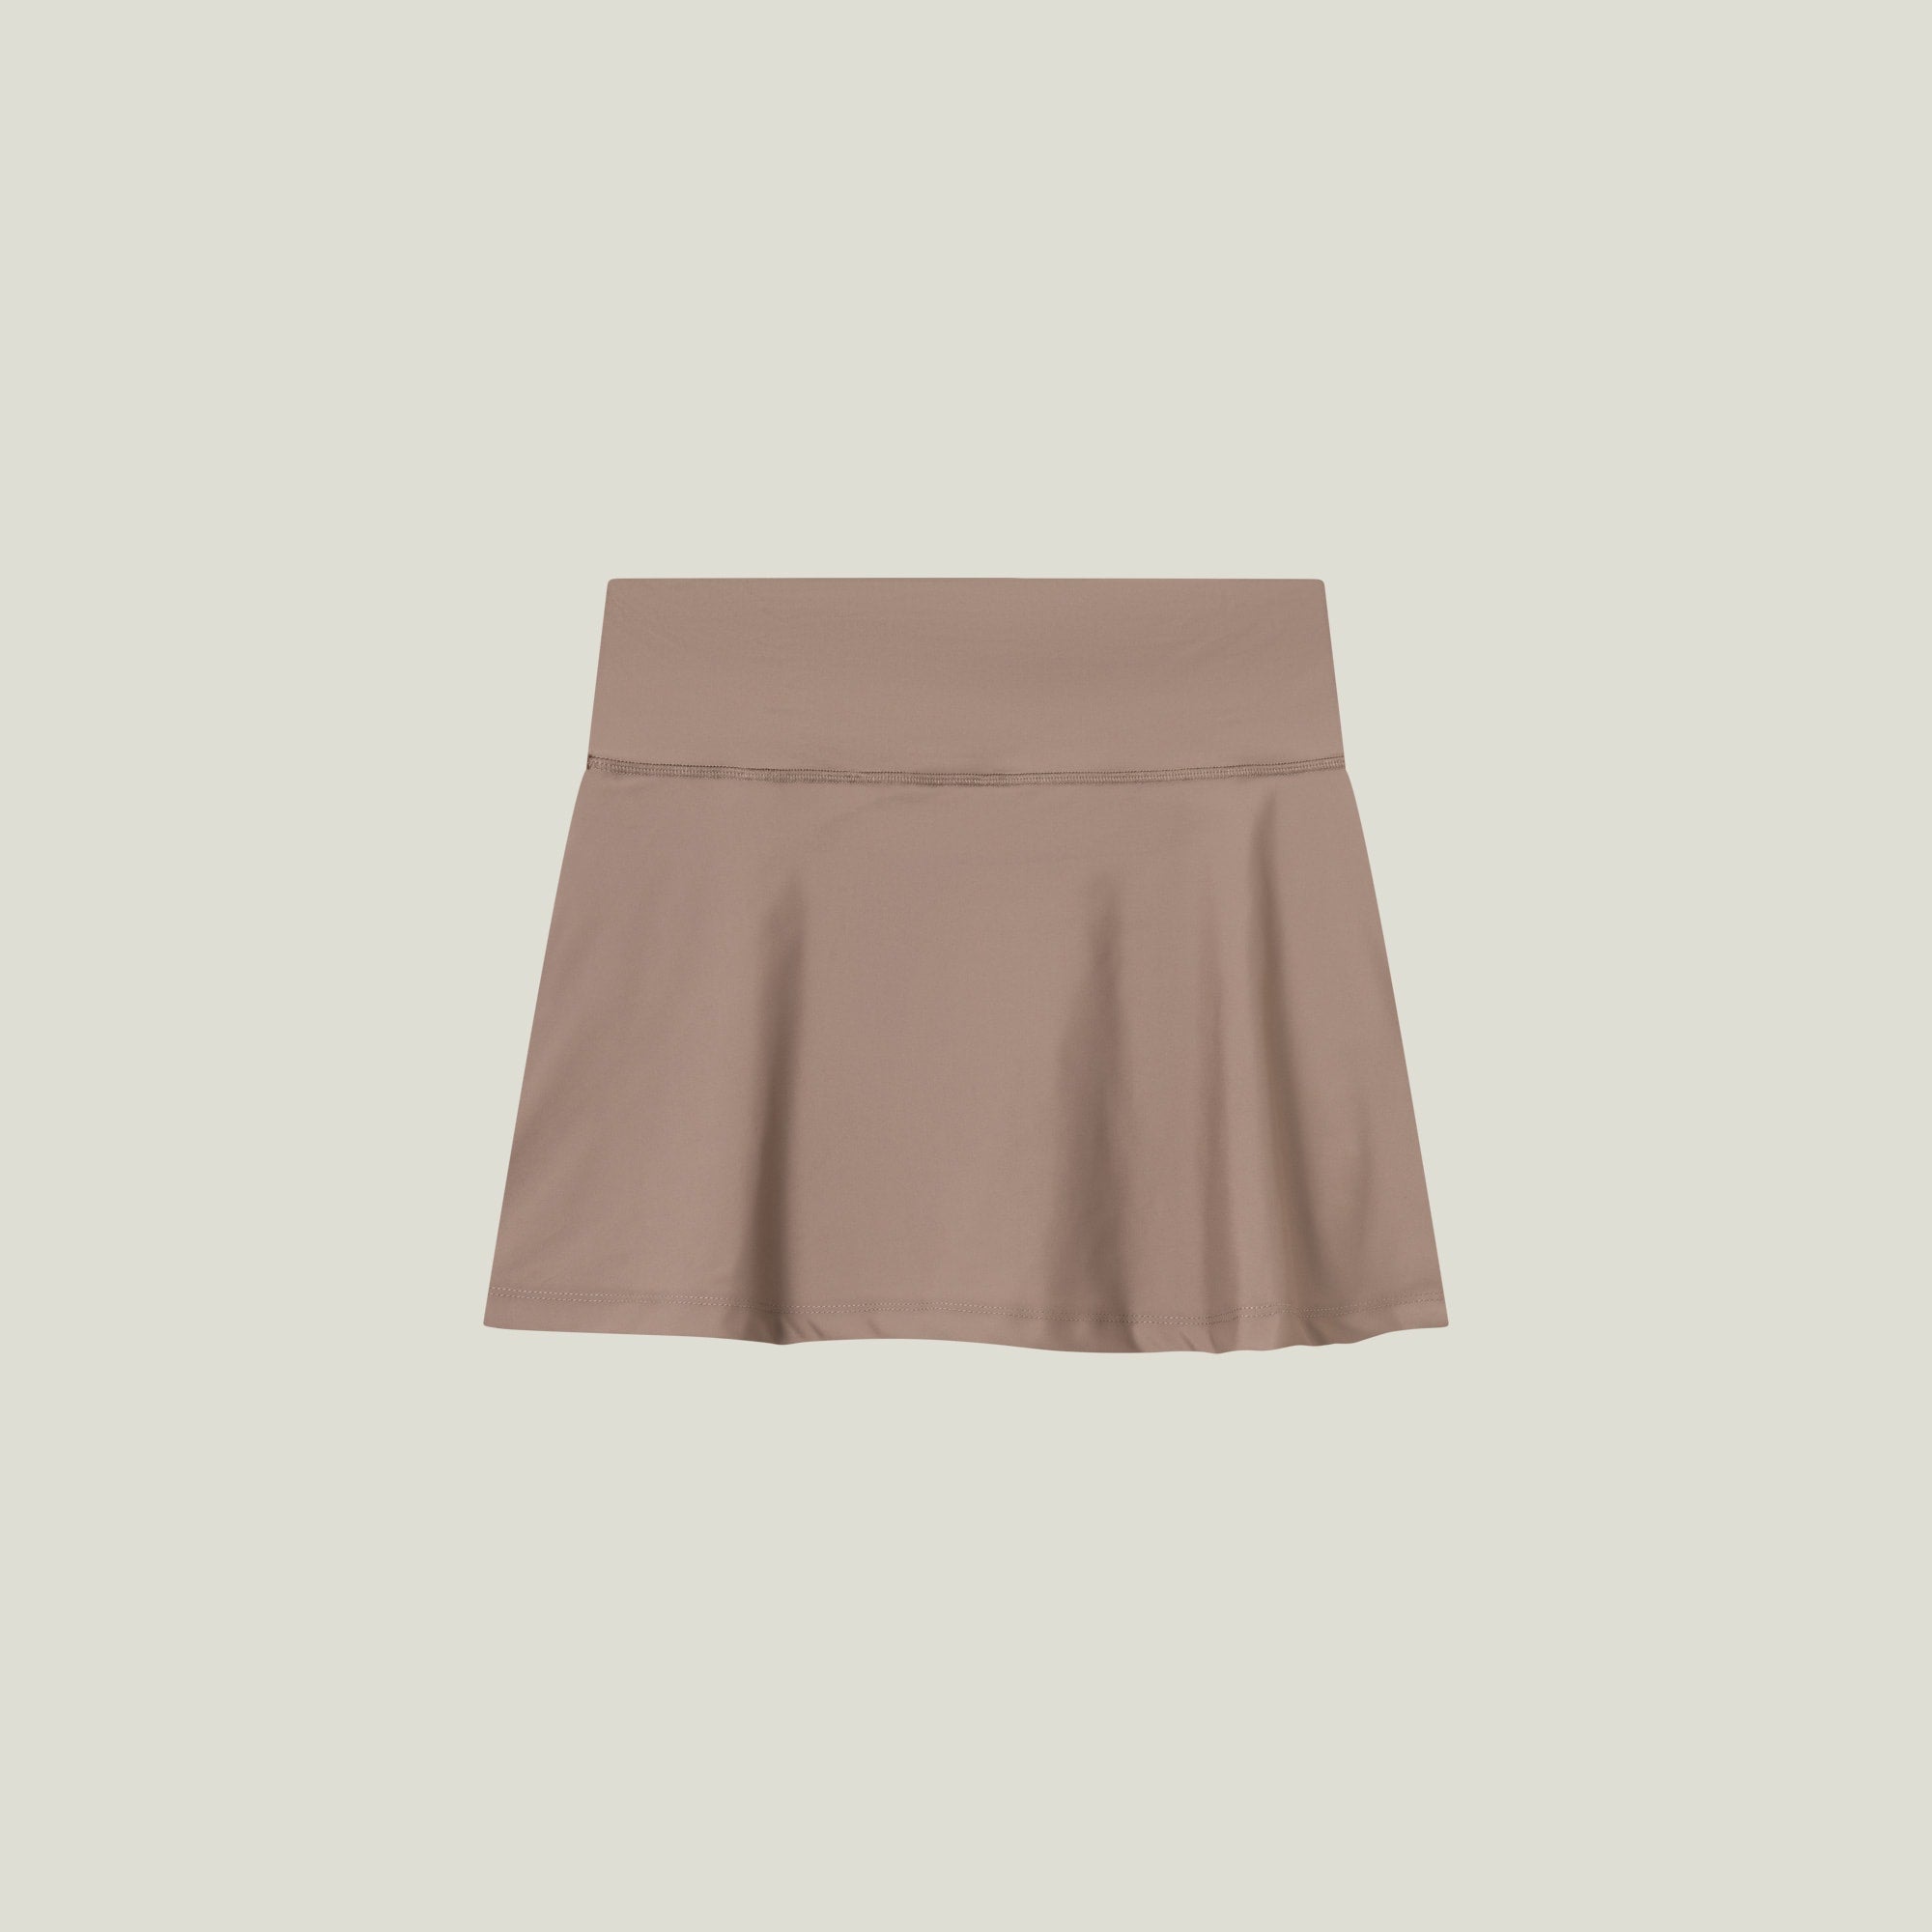 Oncourt Skirt & Tanktop Kit - Brown & Army